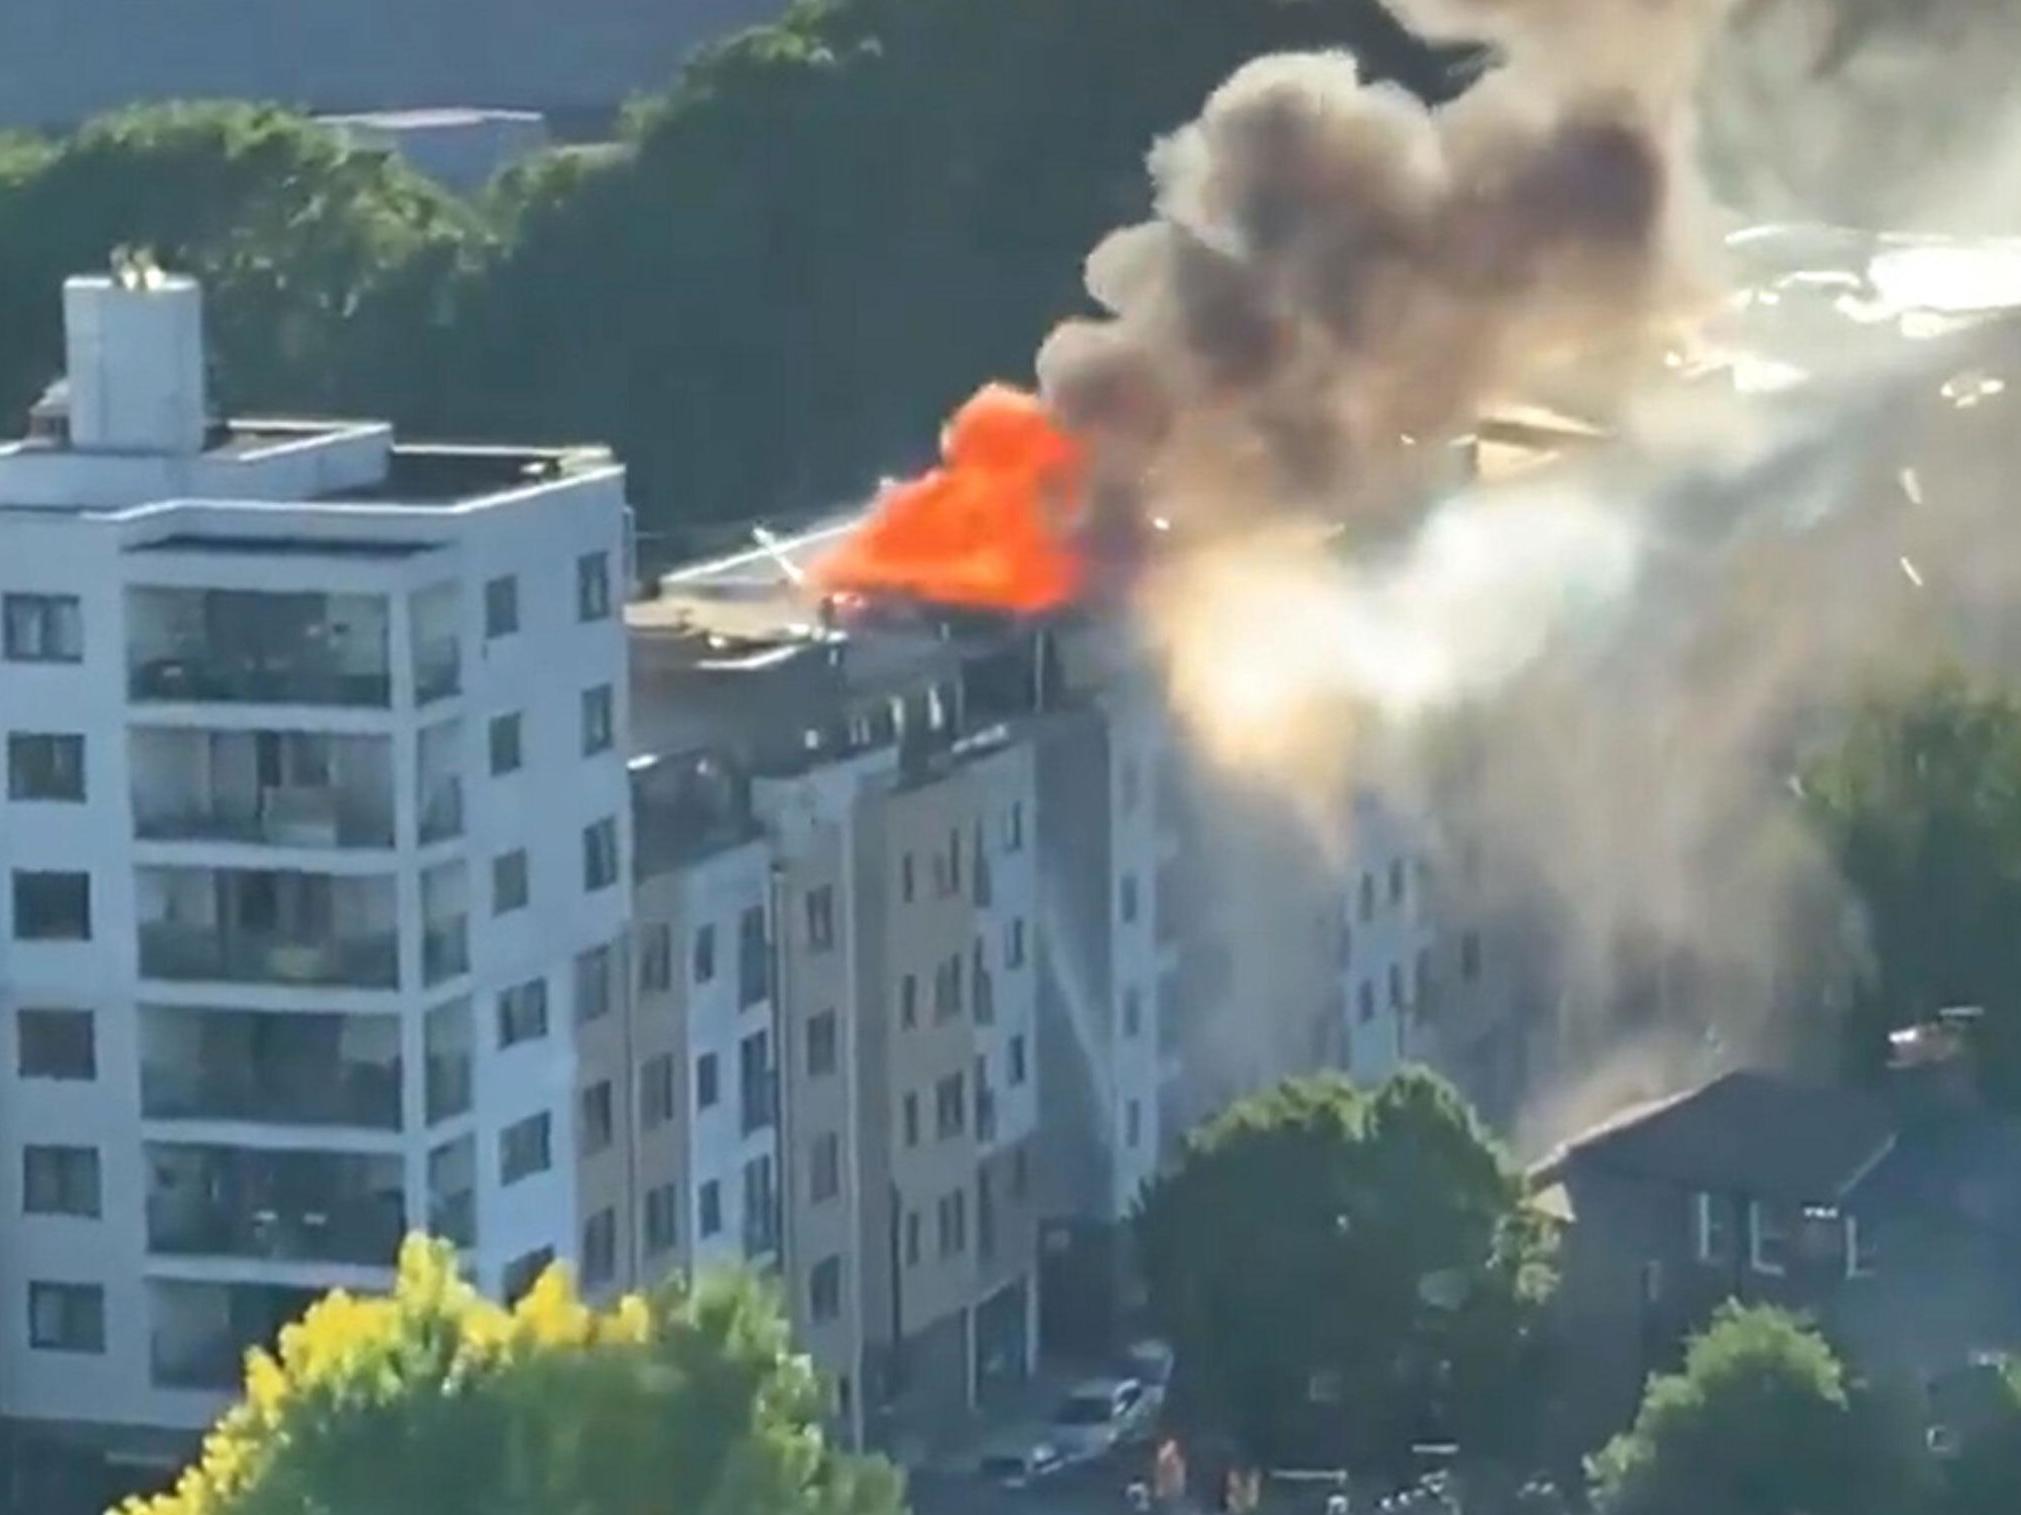 Deptford fire: 80 firefighters tackle blaze at flats as smoke seen across London thumbnail